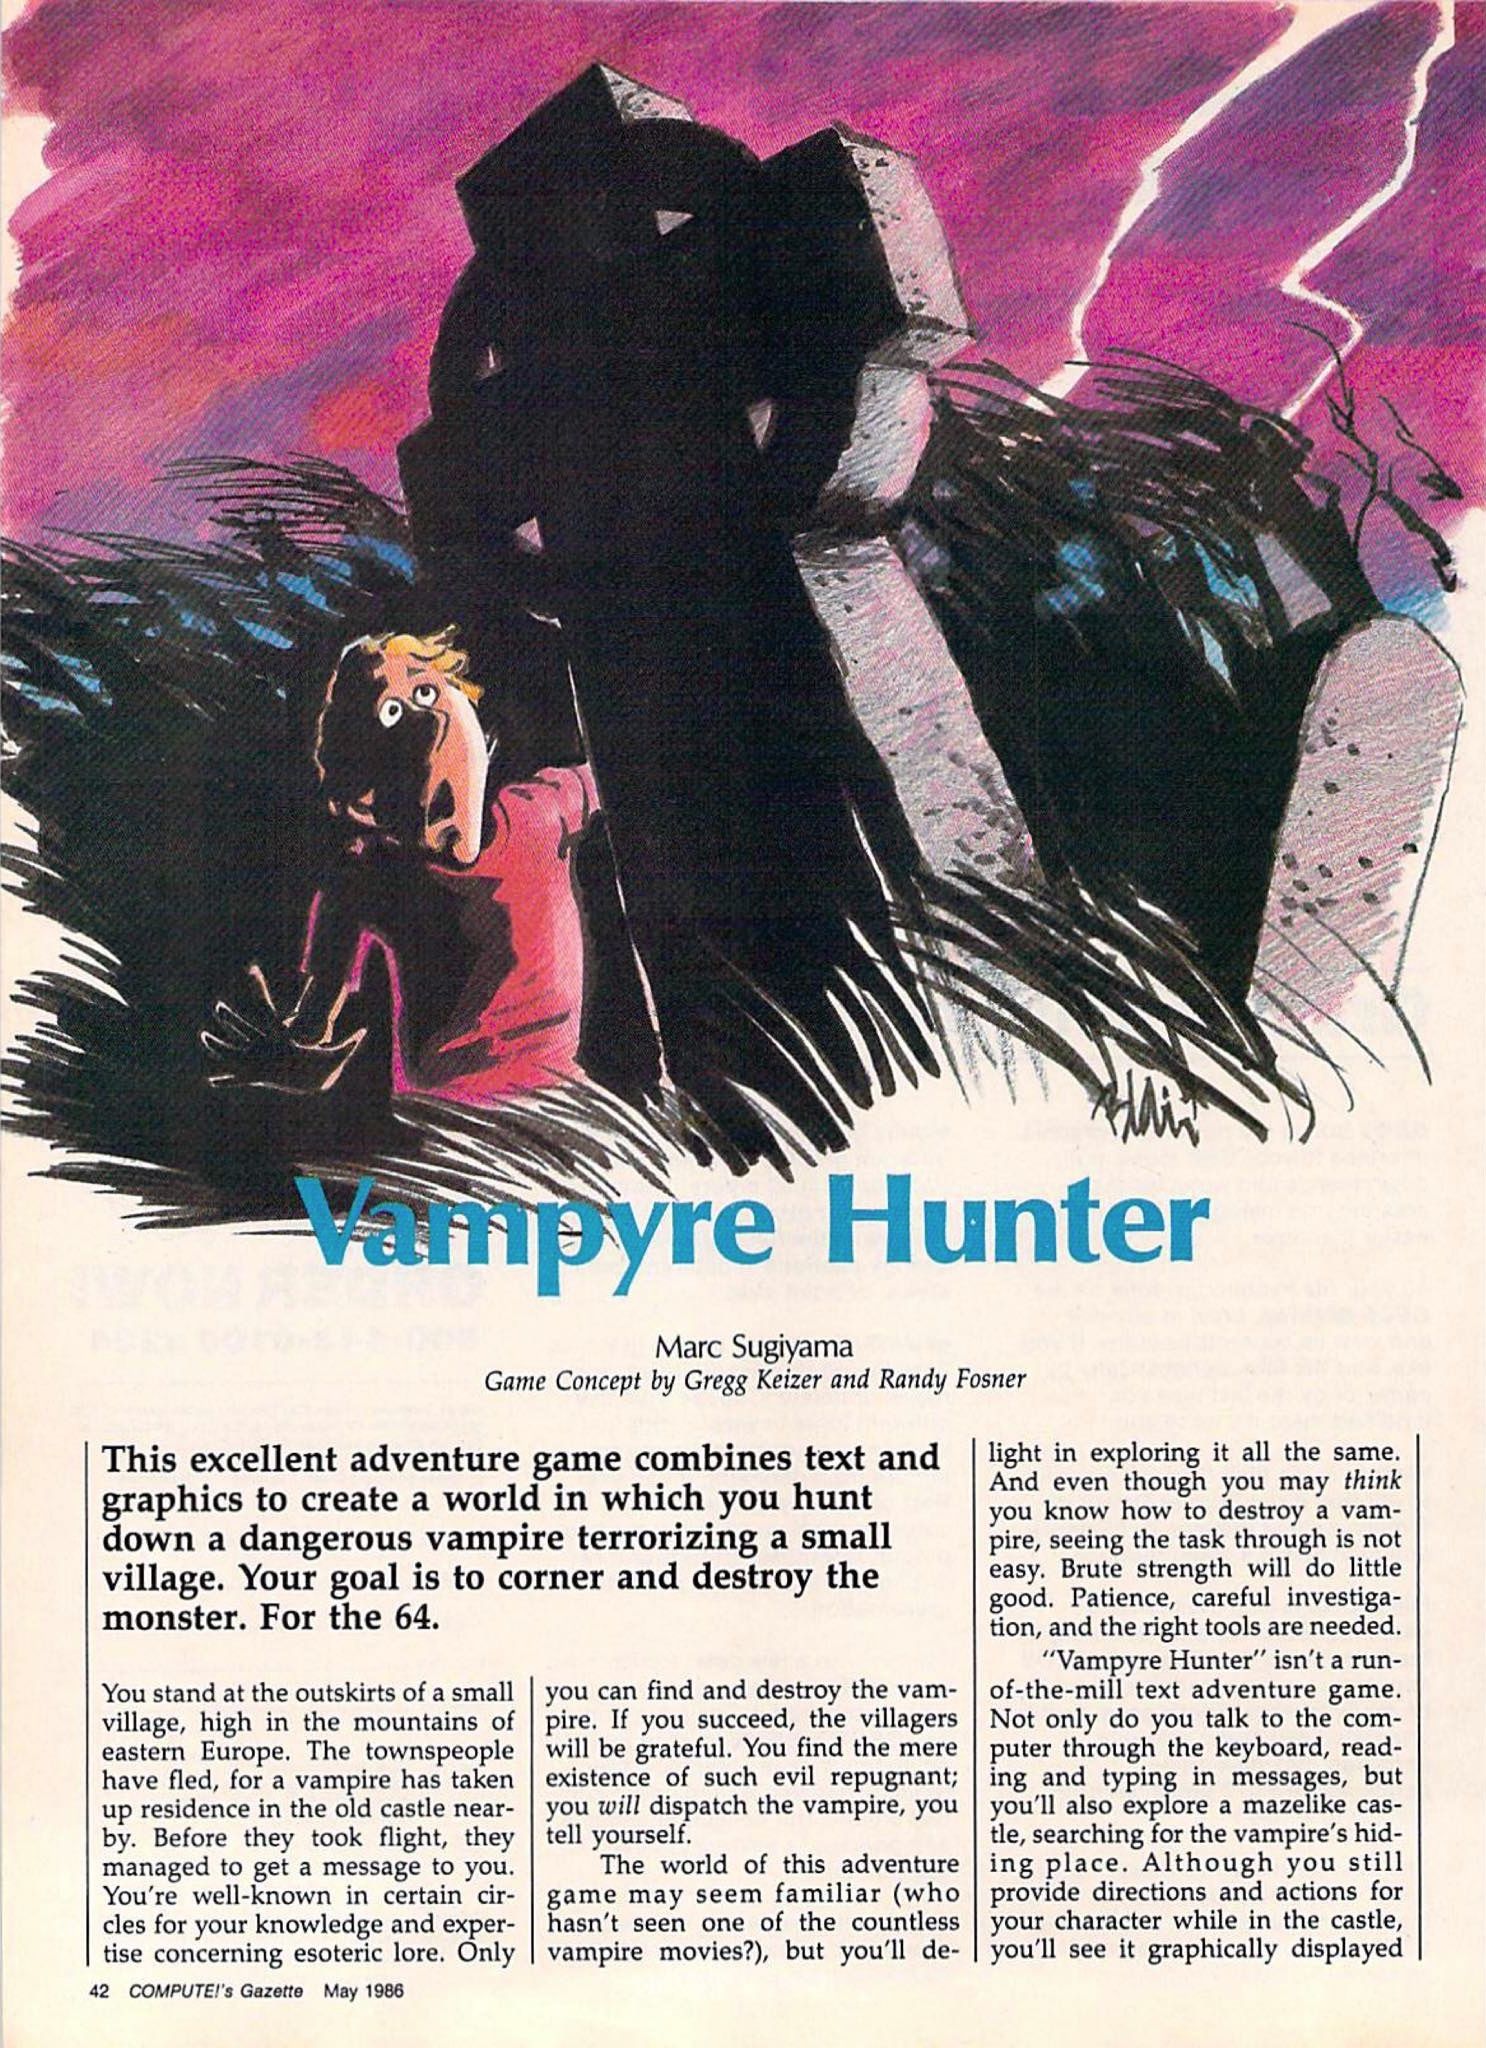 Exploring Vampyre Hunter (C64)